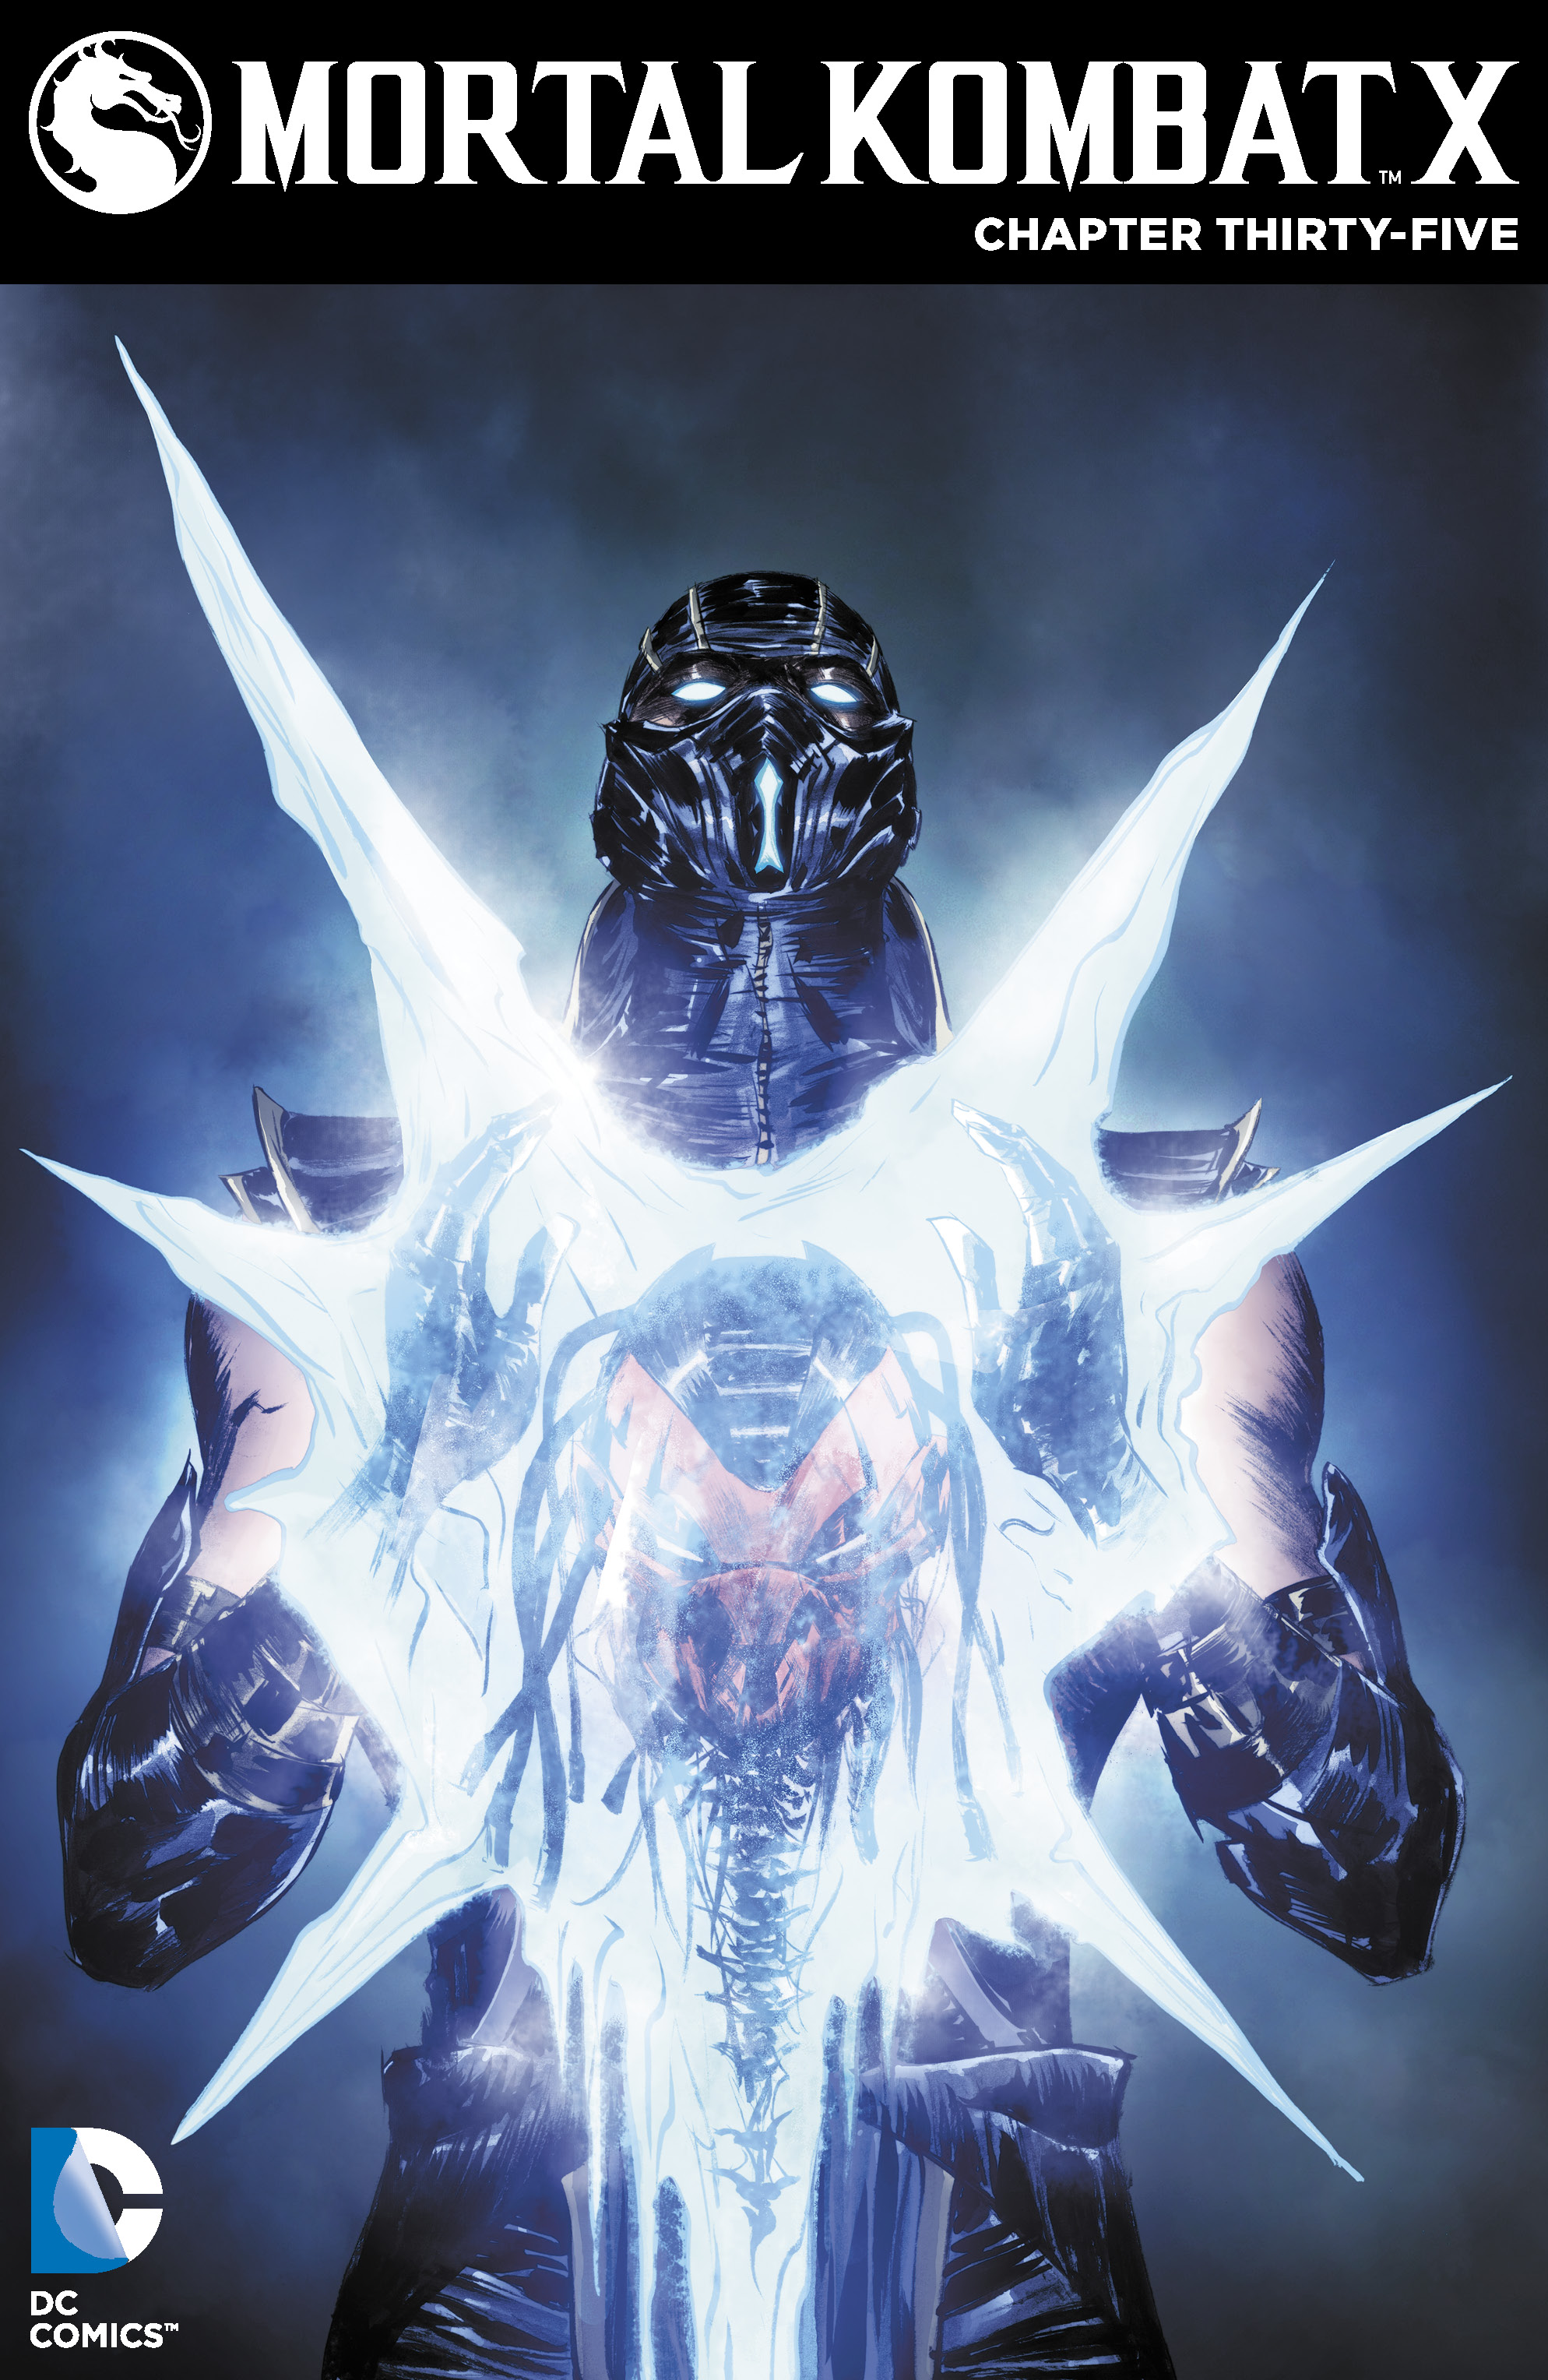 Mortal Kombat X #35 preview images